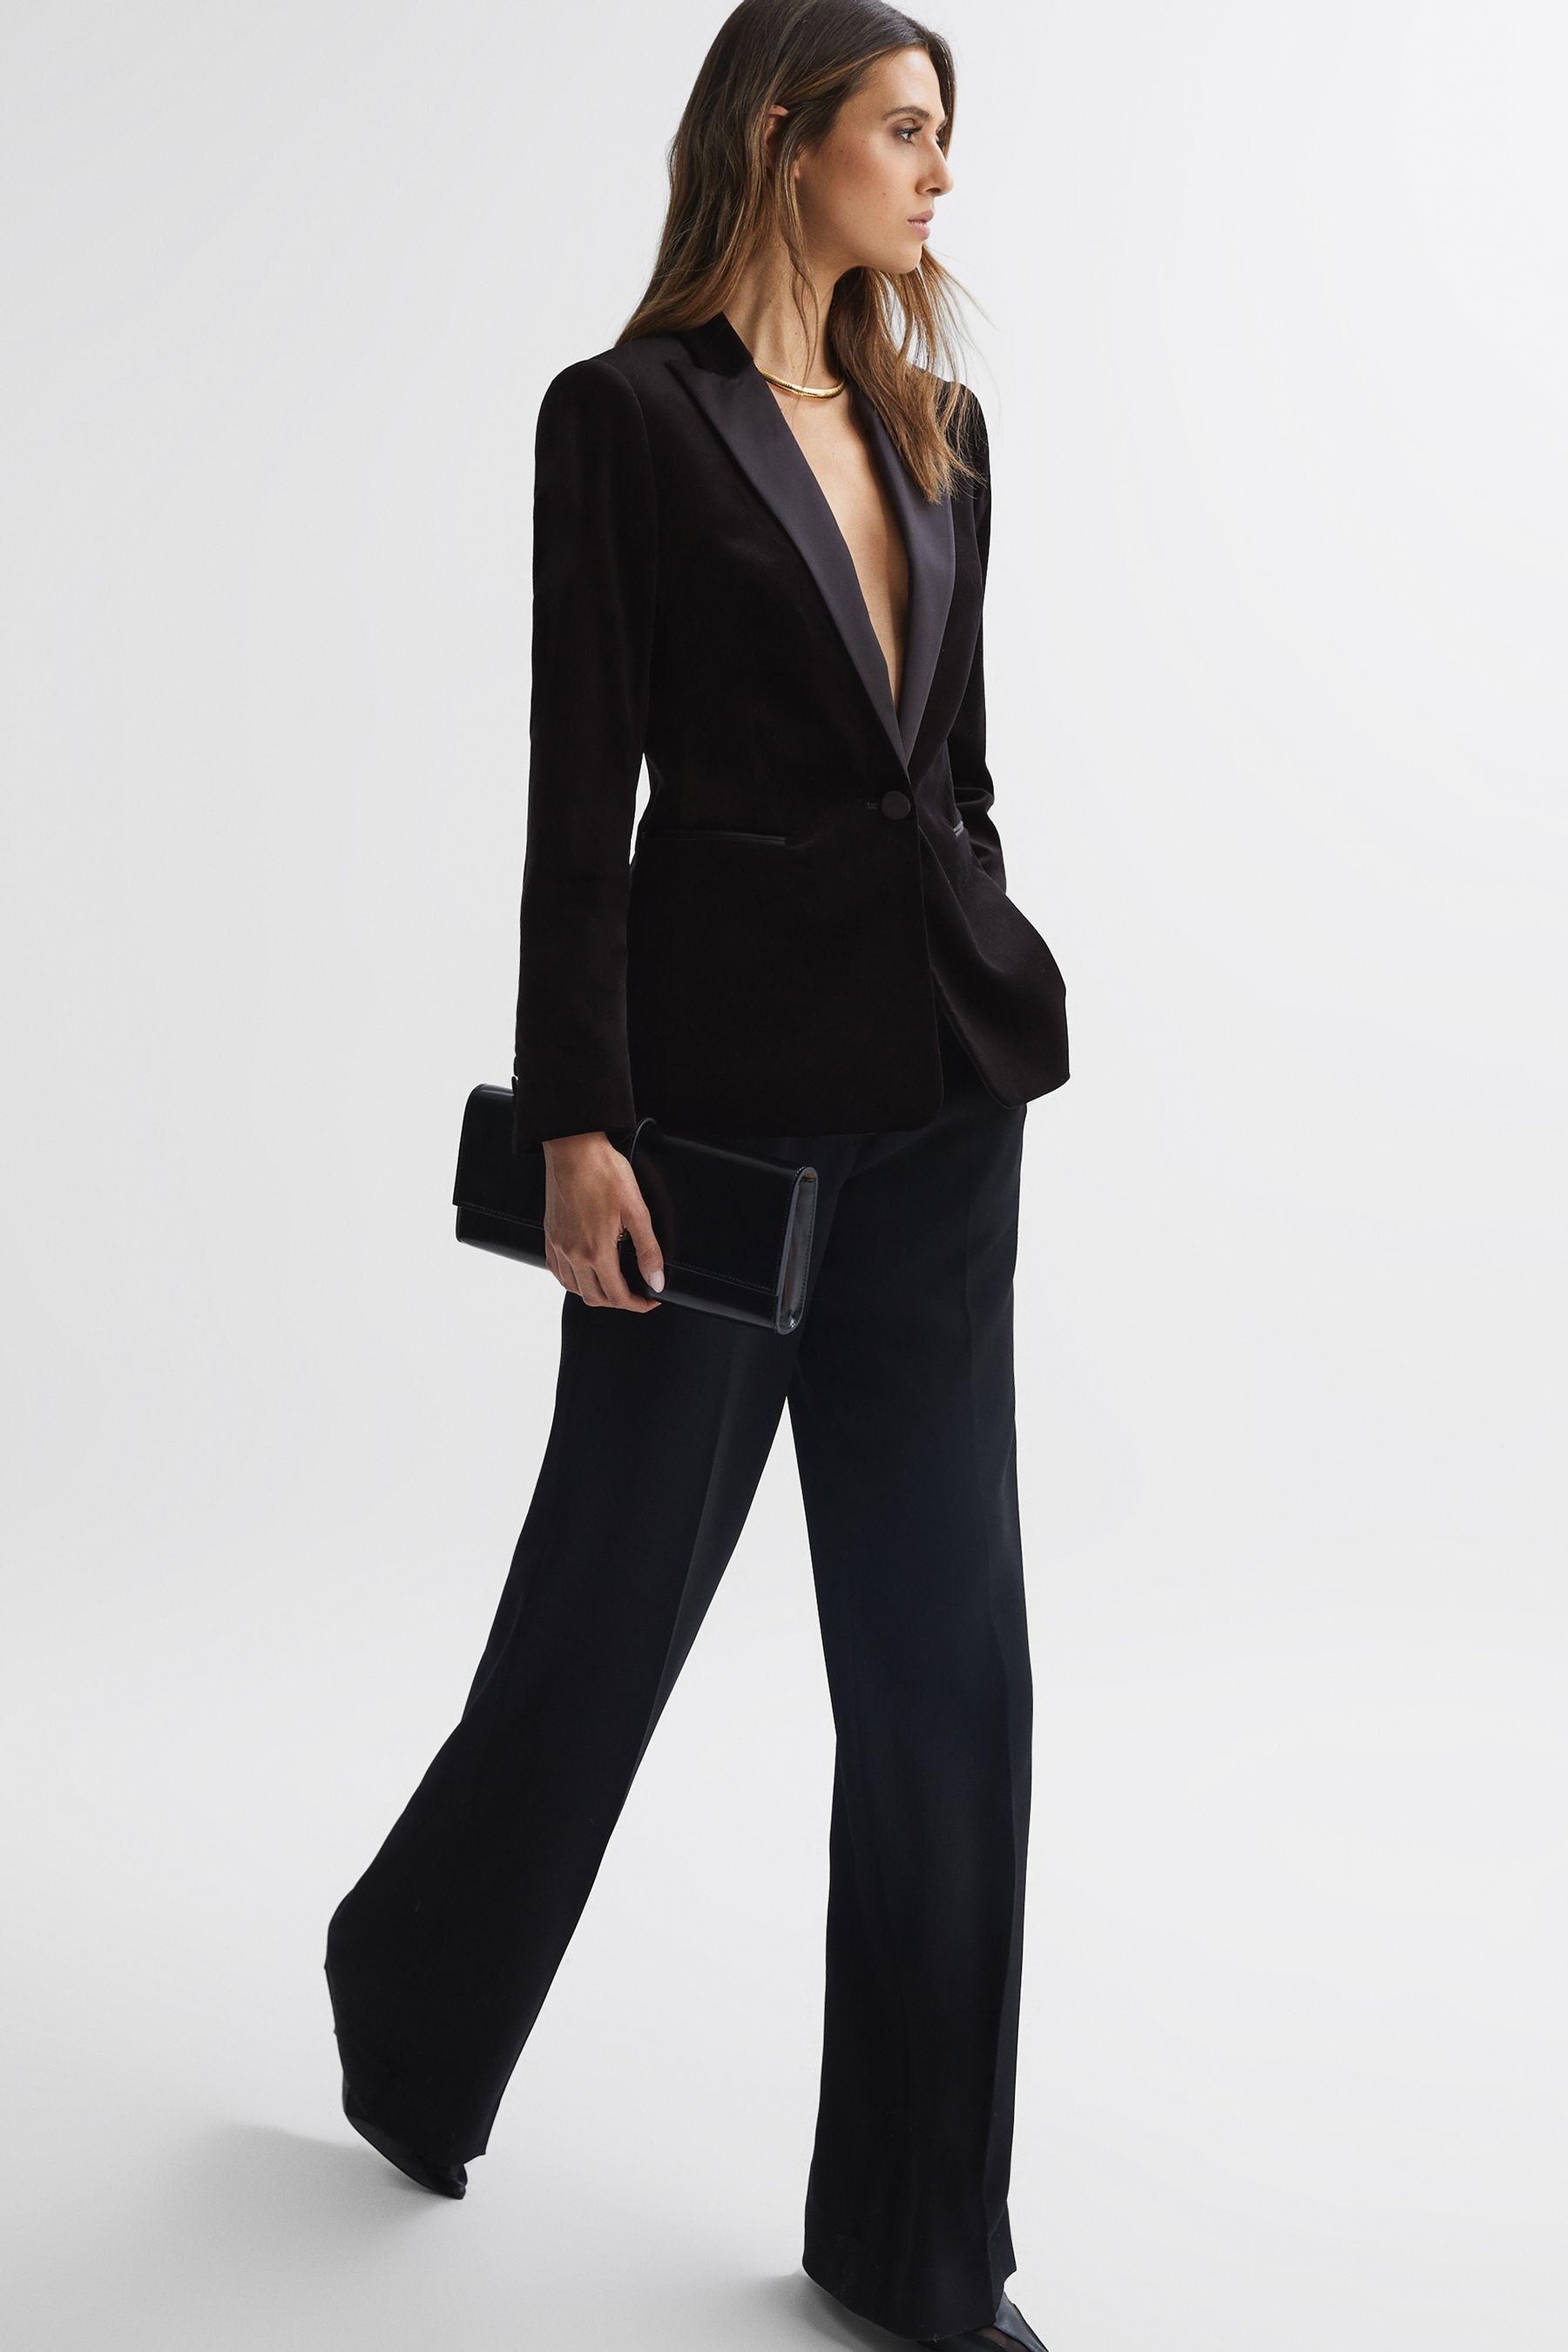 Reiss Opal - Black Fitted Velvet Single Breasted Suit Blazer, Us 12